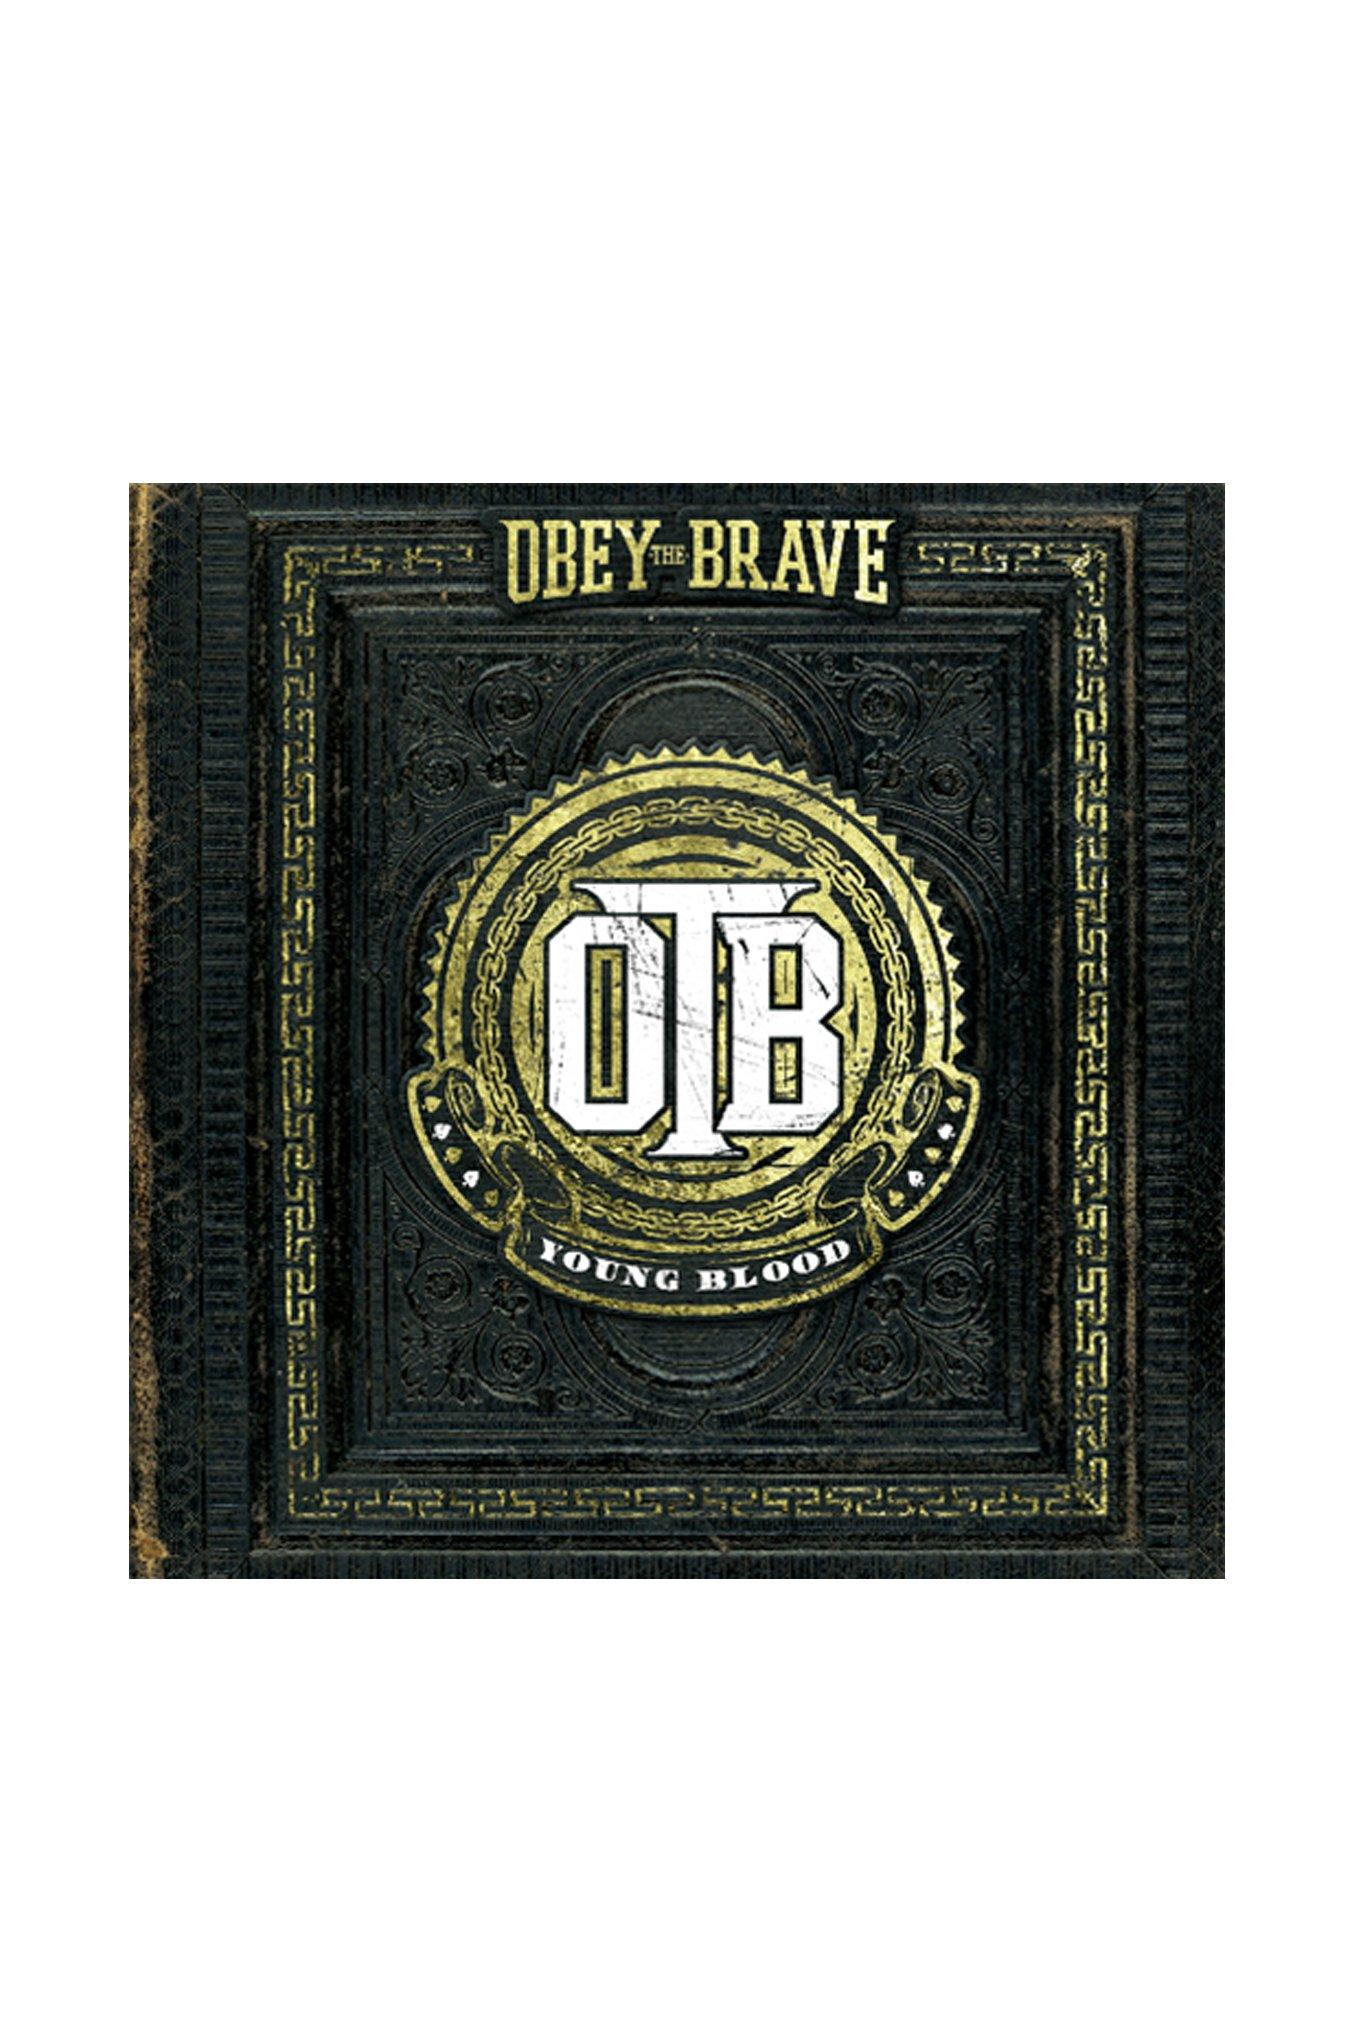 Obey The Brave - Young Blood Vinyl LP, , hi-res